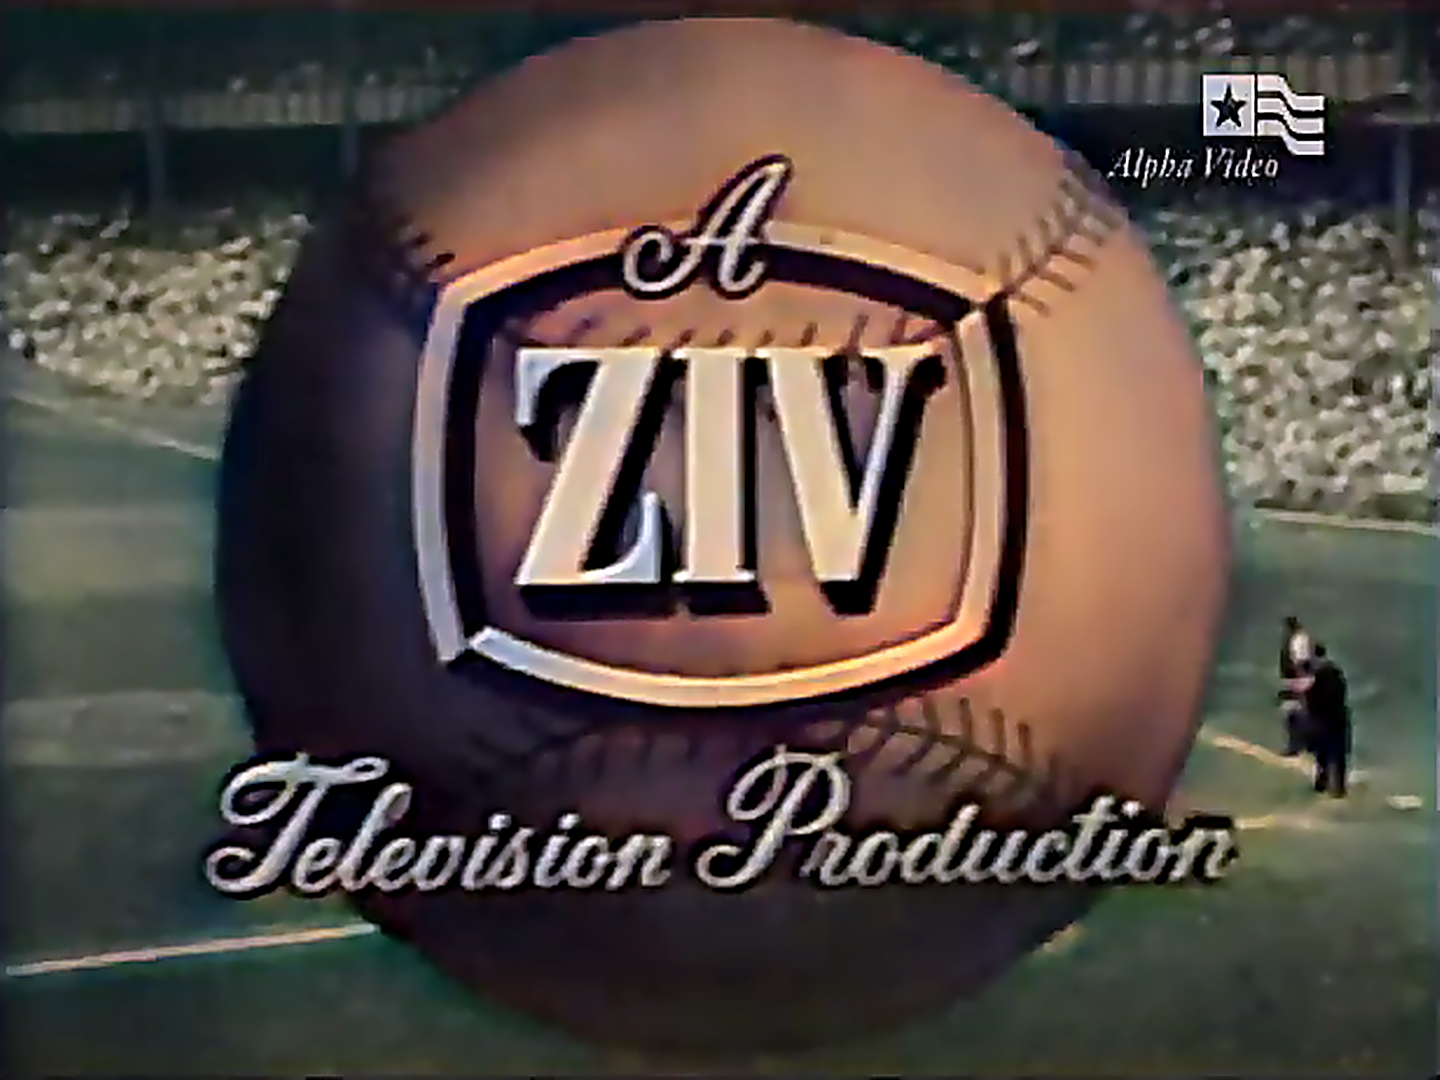 Ziv Television Programs (1965)